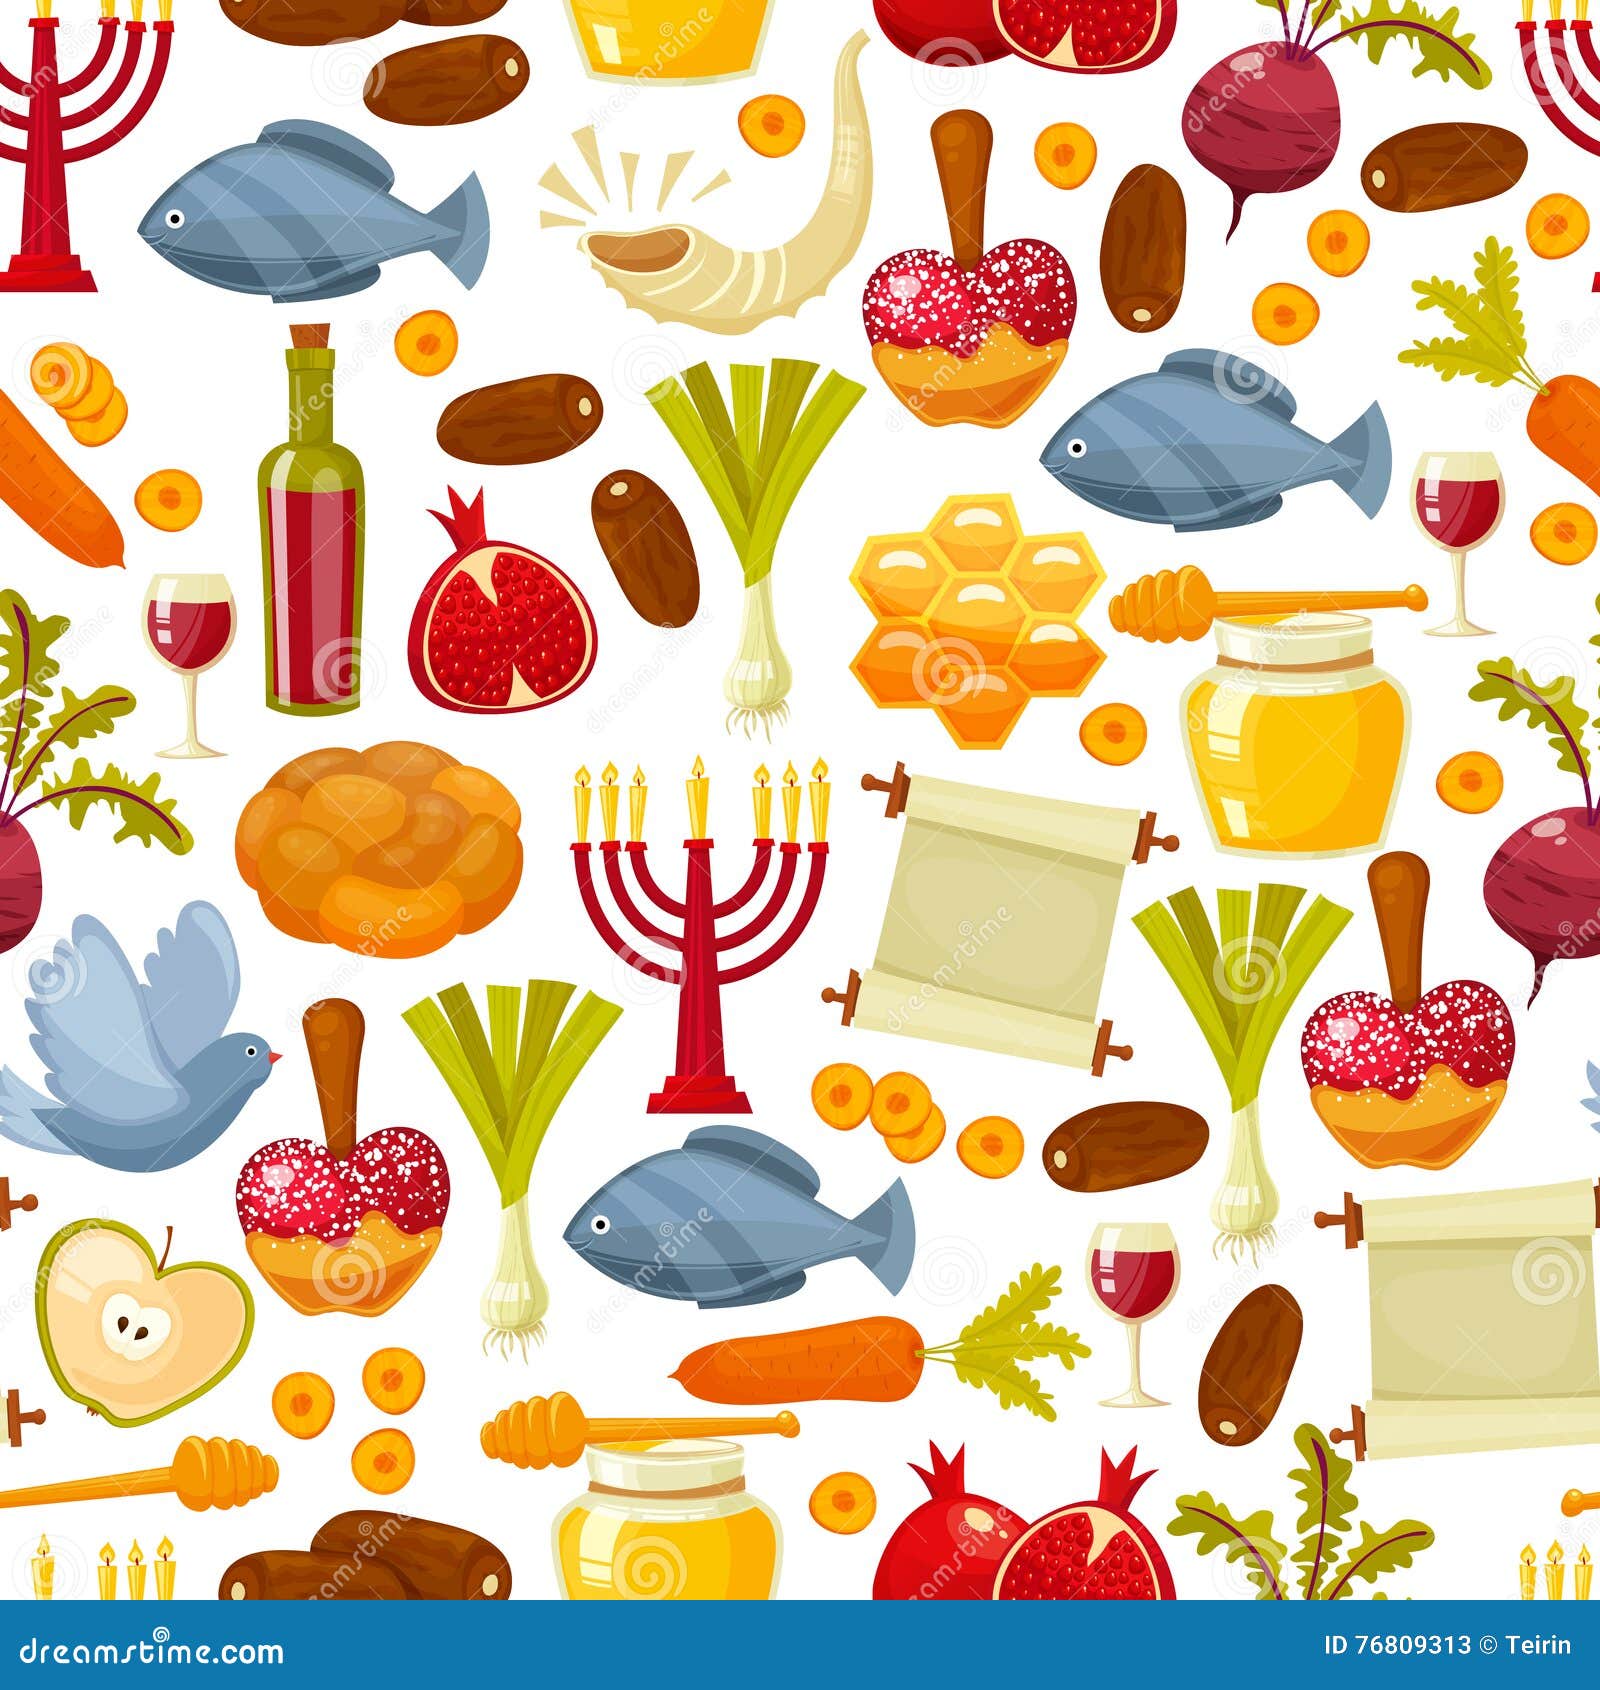 Colorful Seamless Pattern With Symbols Of Rosh Hashanah Jewish New Year